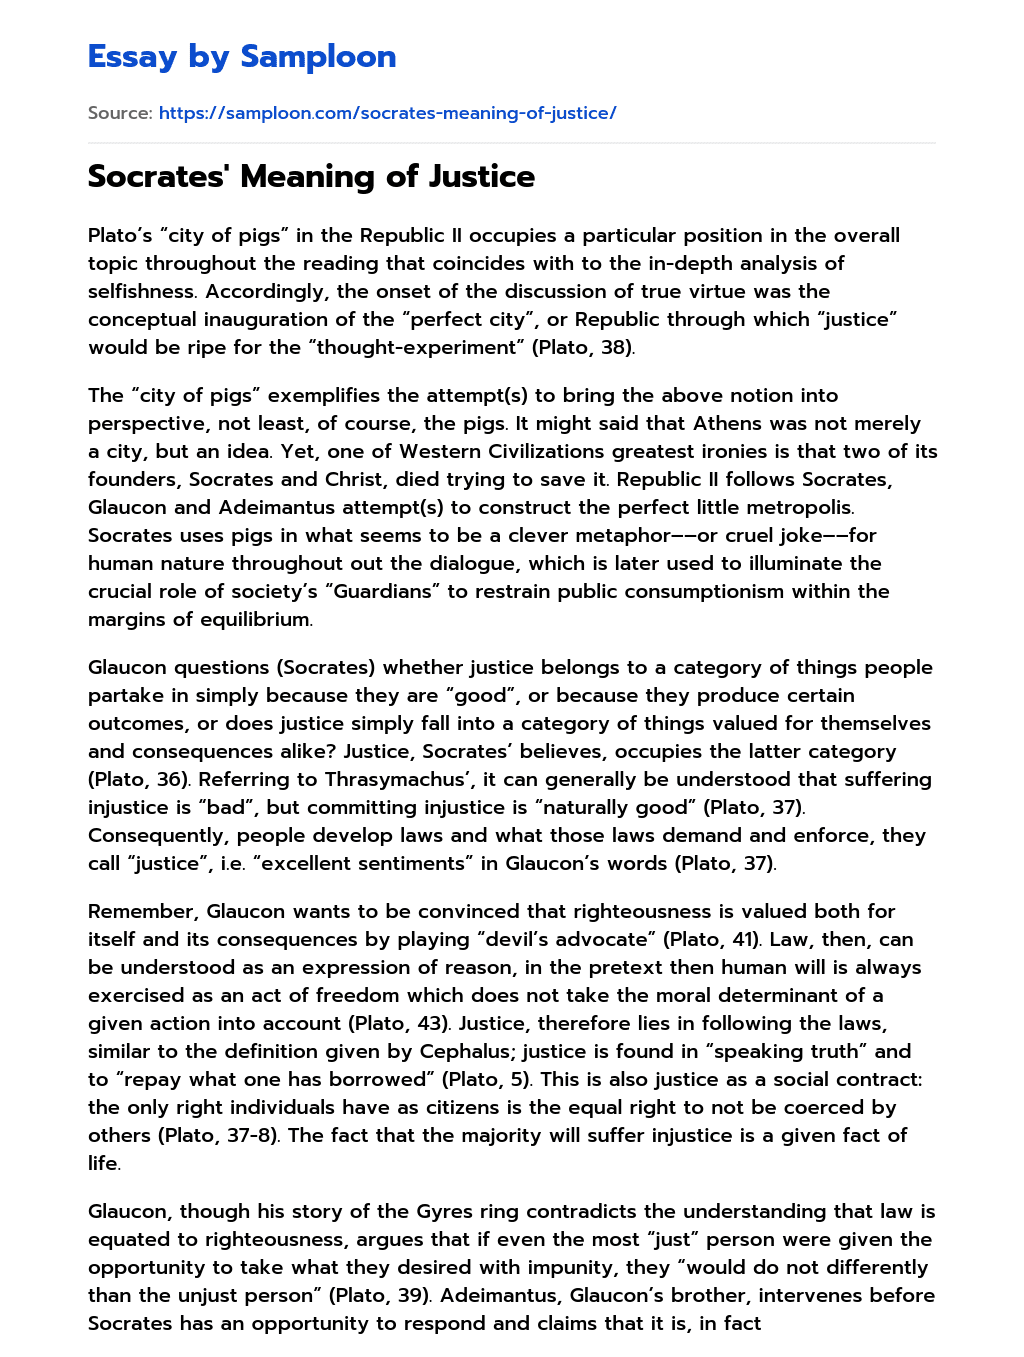 Socrates’ Meaning of Justice Argumentative Essay essay